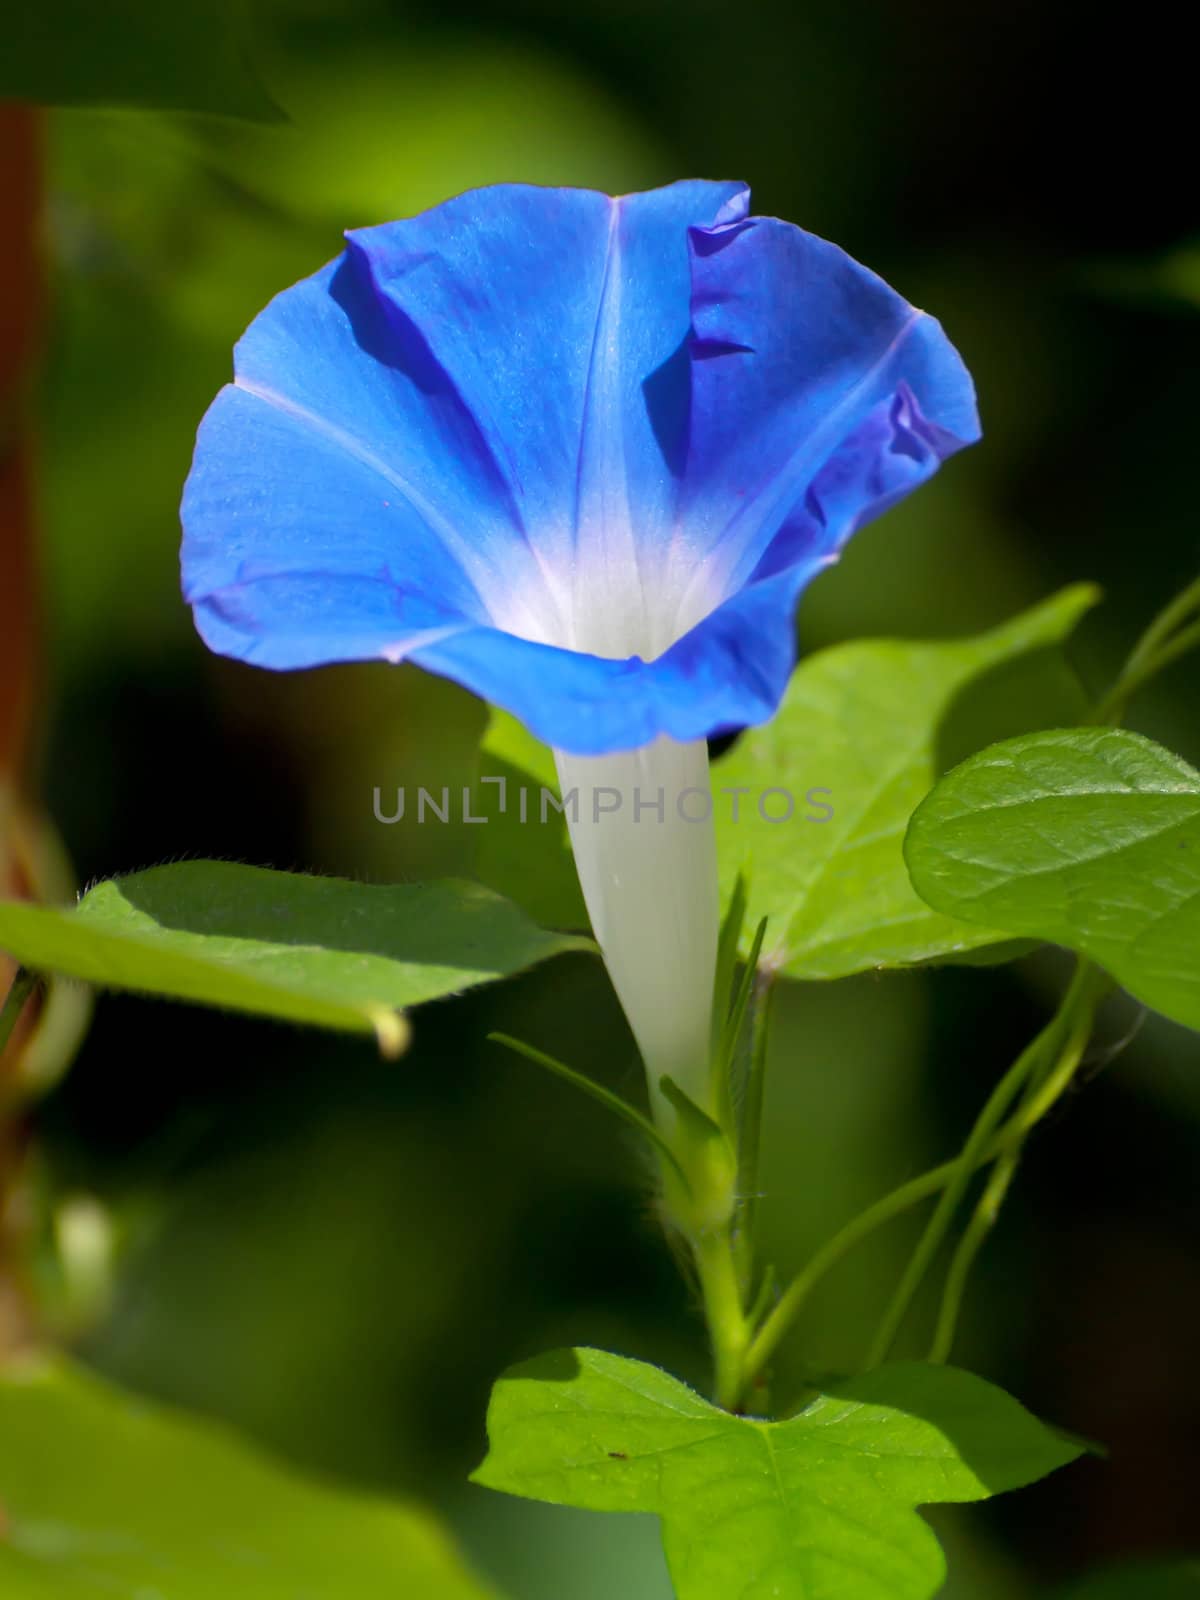 Blue morning glory flower by Exsodus